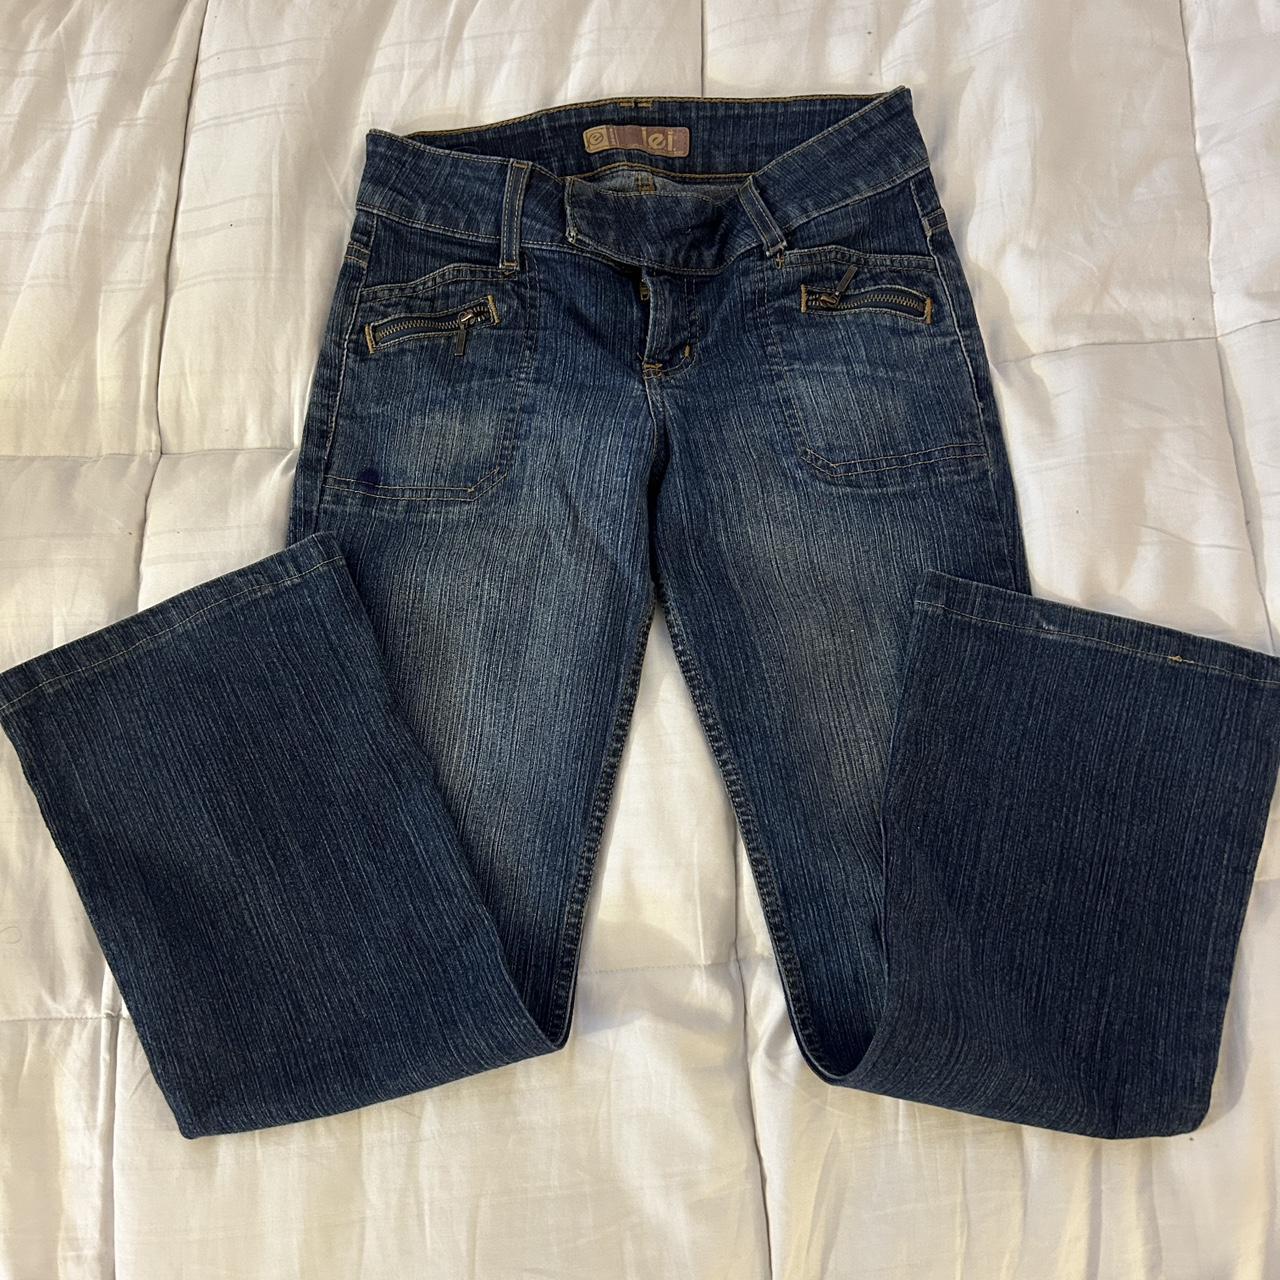 amazing y2k l.e.i jeans size 25/26 waist better for... - Depop